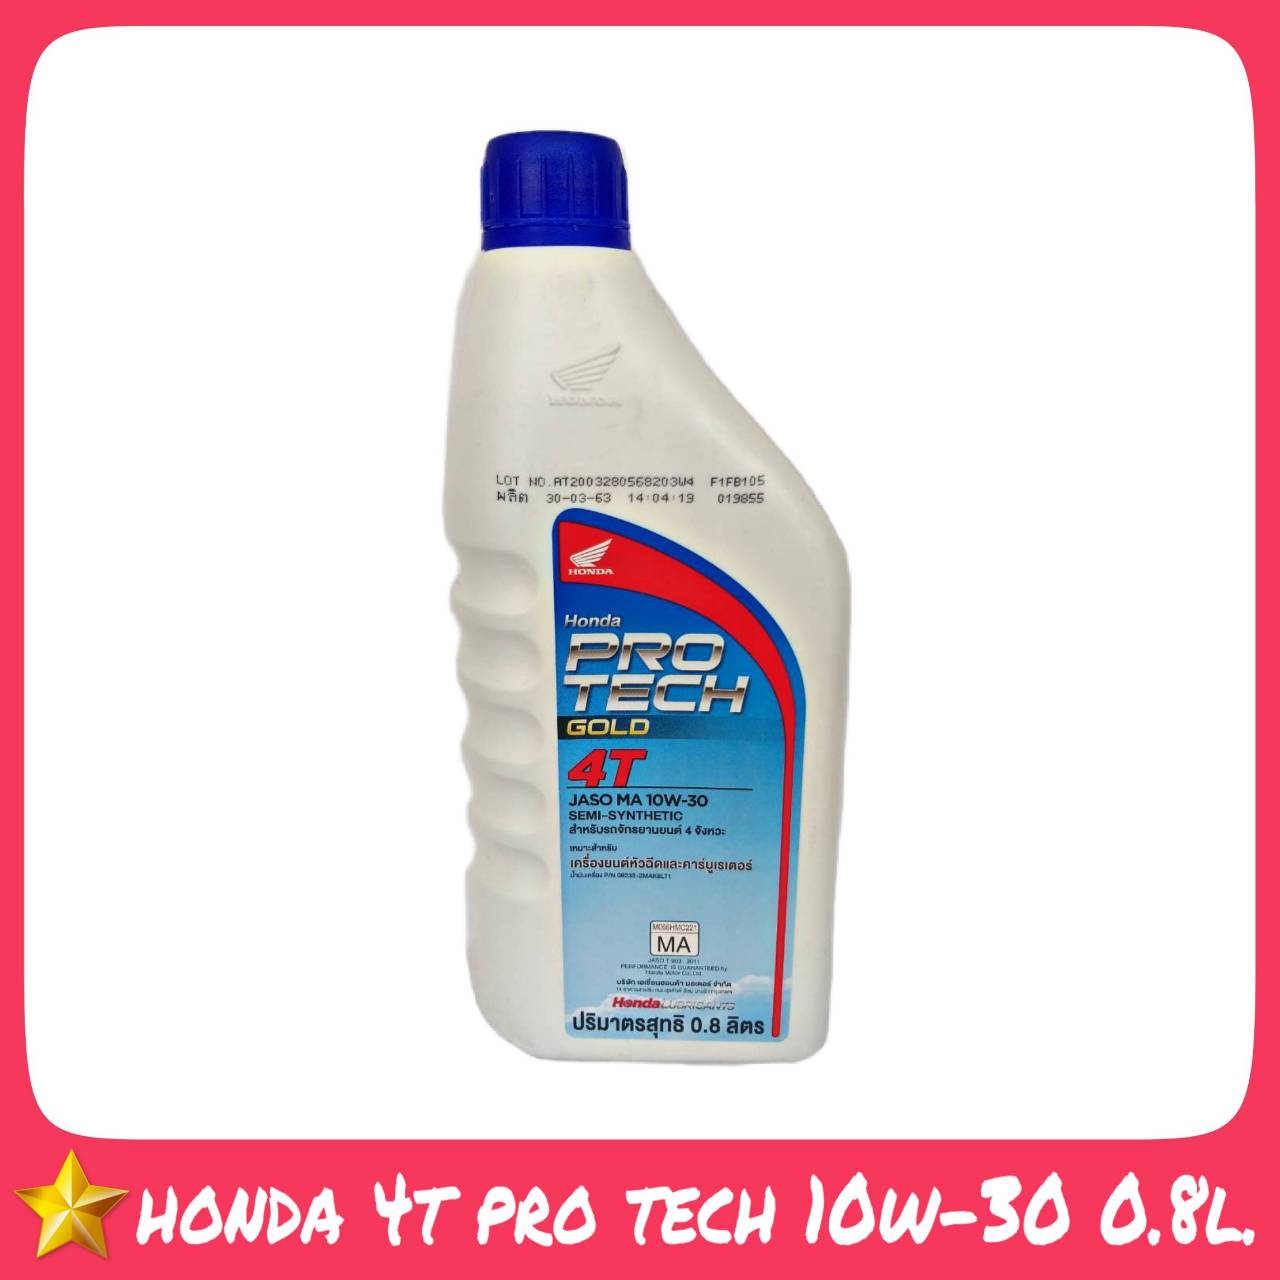 Honda PRO TECH 4T 10W-30 ปริมาณ 0.8ลิตร น้ำมันเครื่องมอเตอร์ไซค์